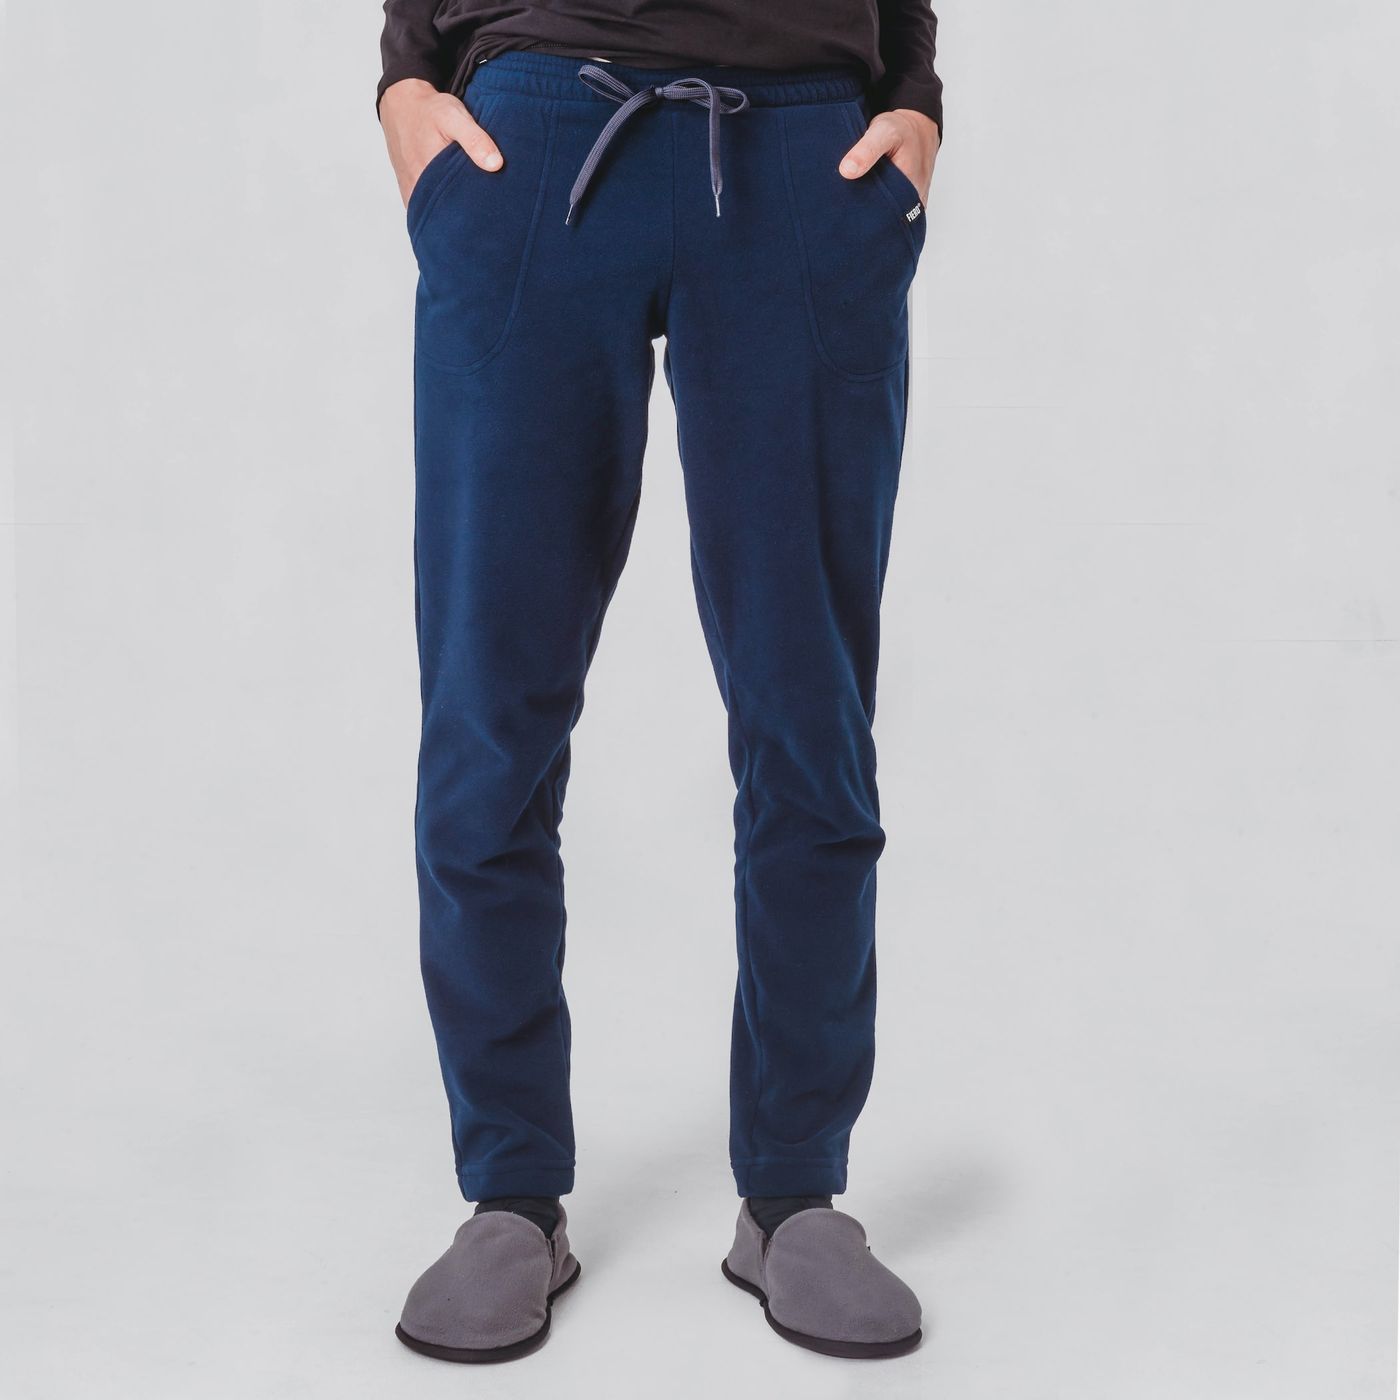 calça masculina azul marinho